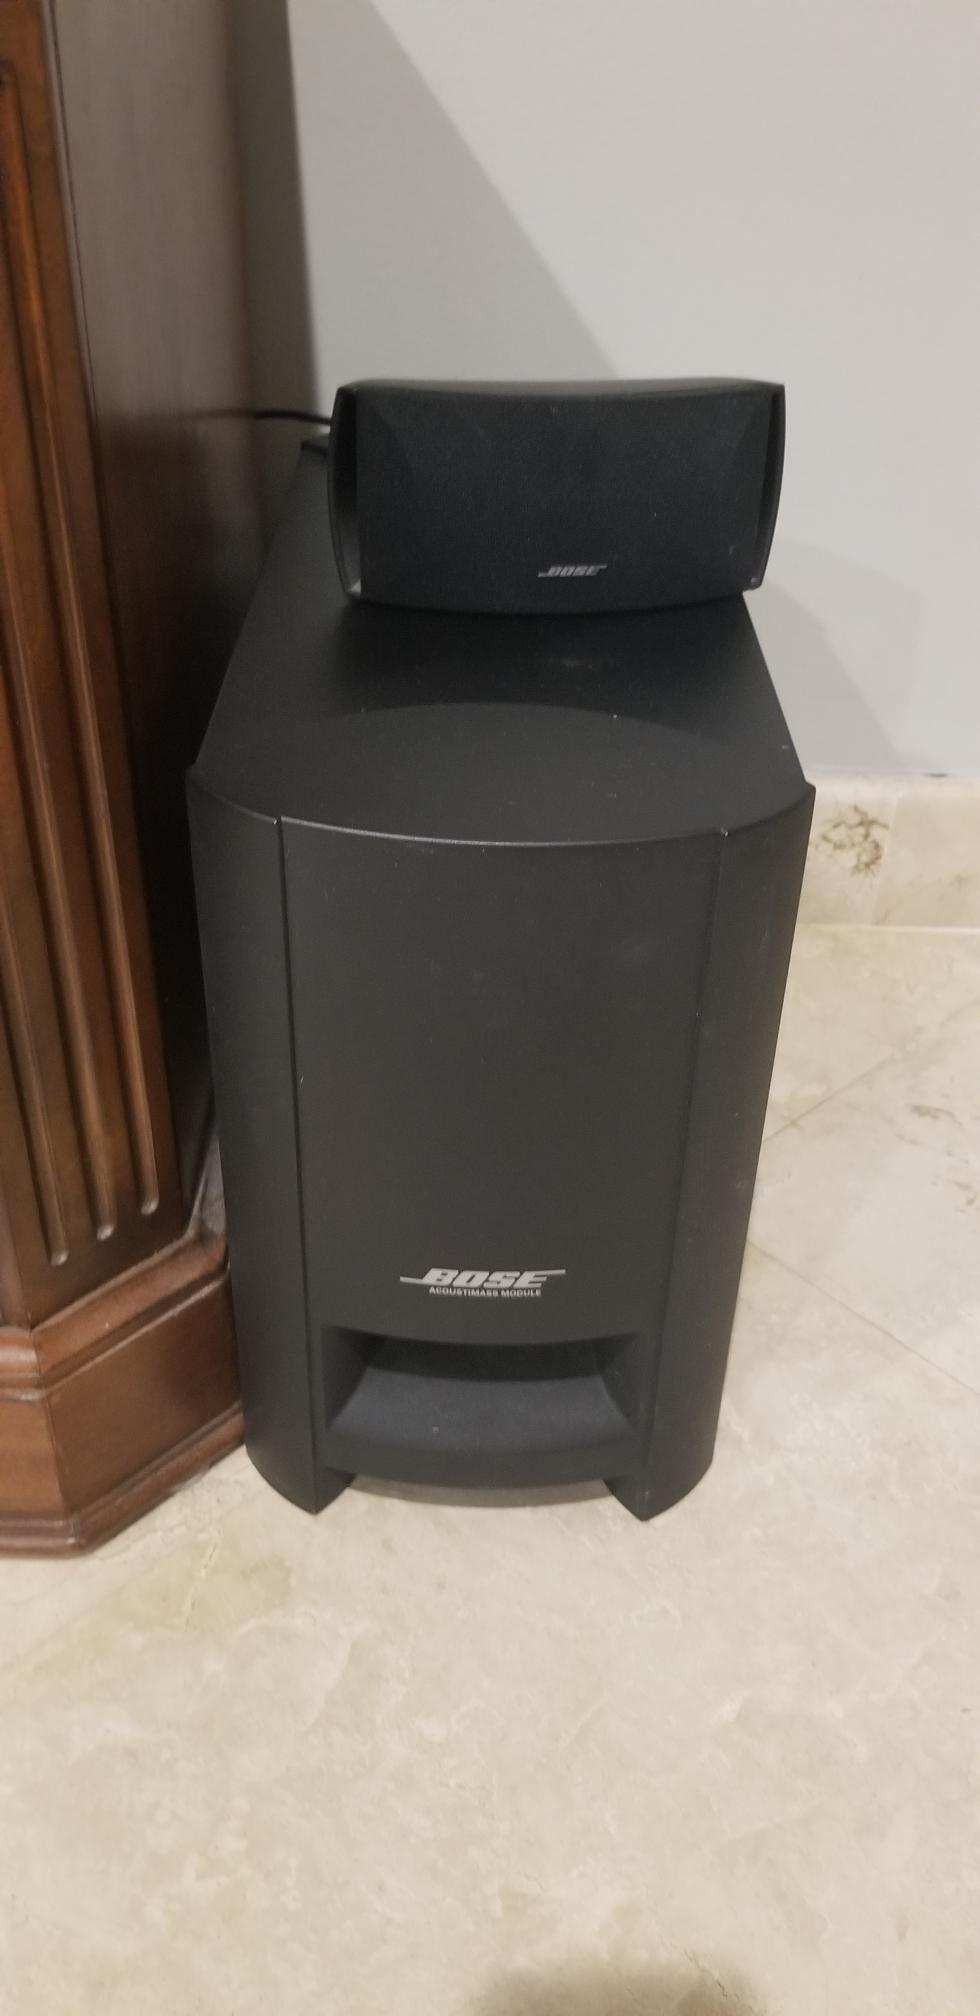 Bose surround sound system